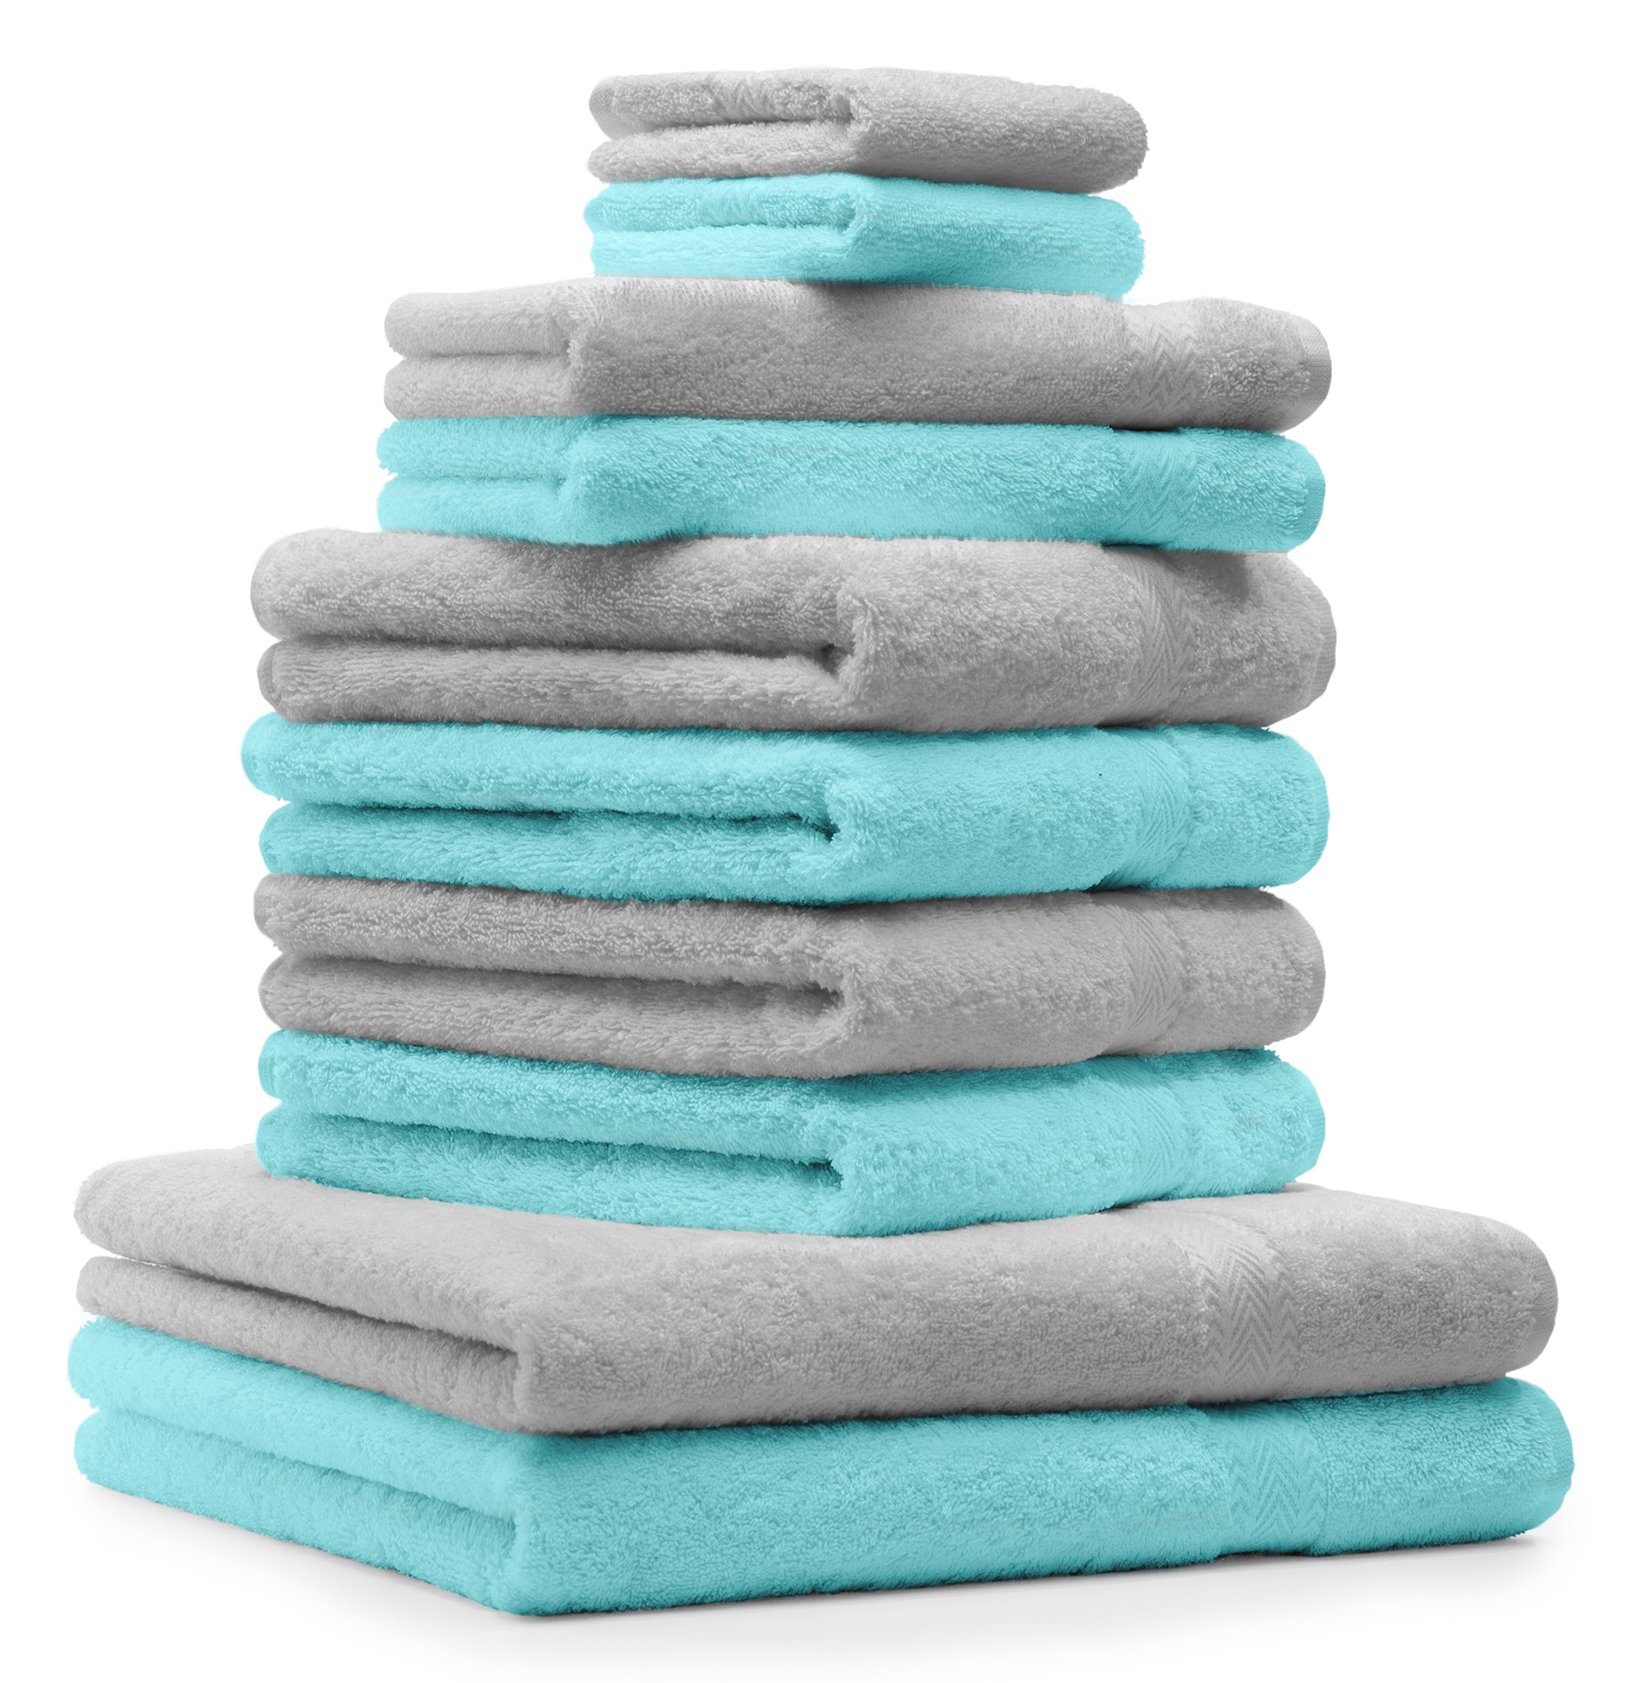 Betz Handtuch Set »10-TLG. Handtuch-Set Premium 100% Baumwolle 2  Duschtücher 4 Handtücher 2 Gästetücher 2 Waschhandschuhe Farbe Silber Grau  & Türkis« online kaufen | OTTO